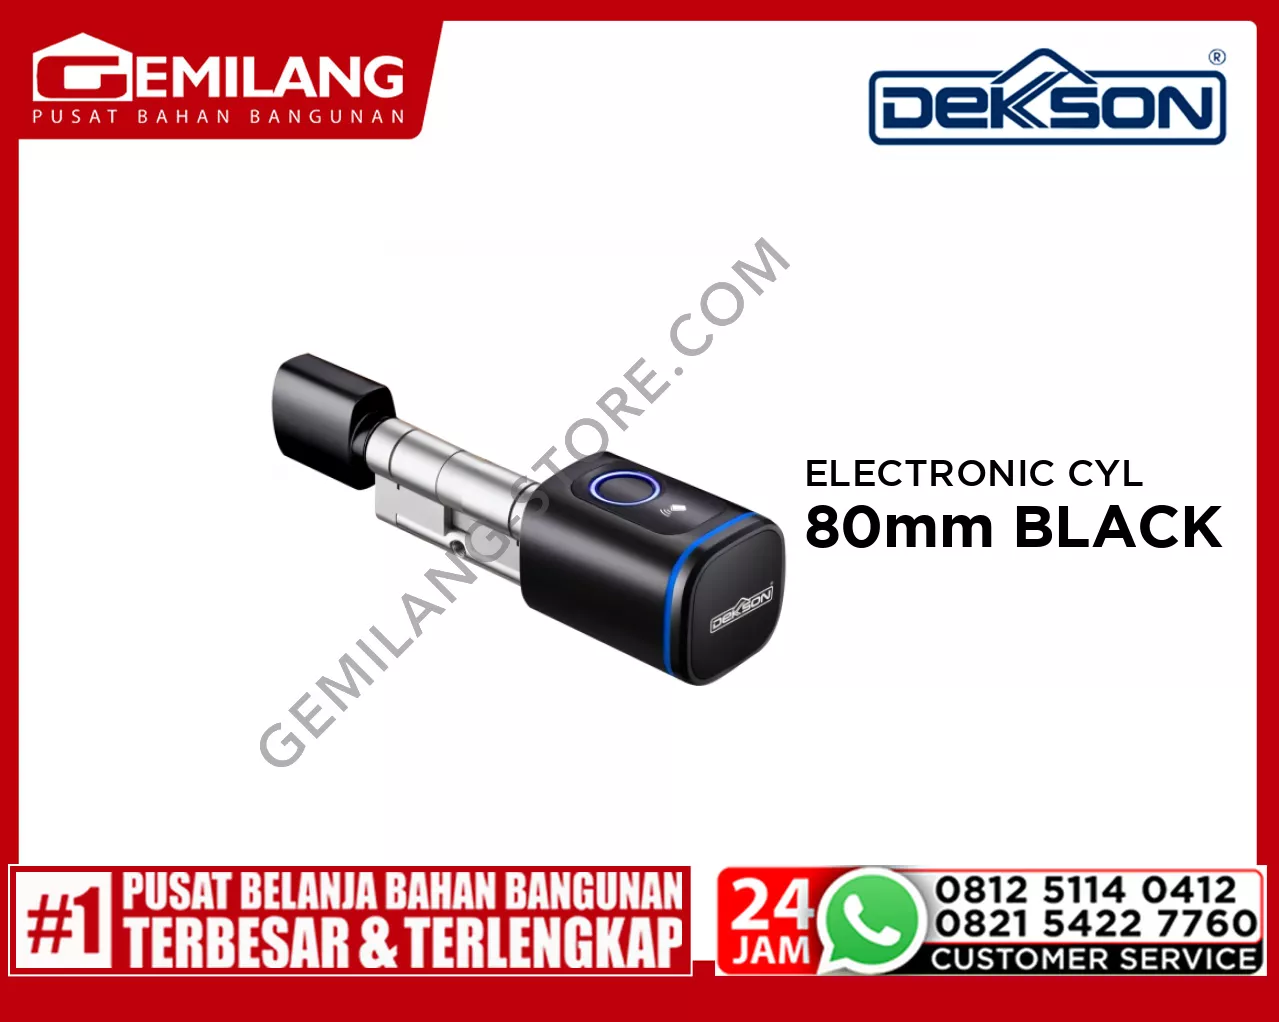 DEKKSON ELECTRONIC CYLINDER EC D01 80mm BLACK